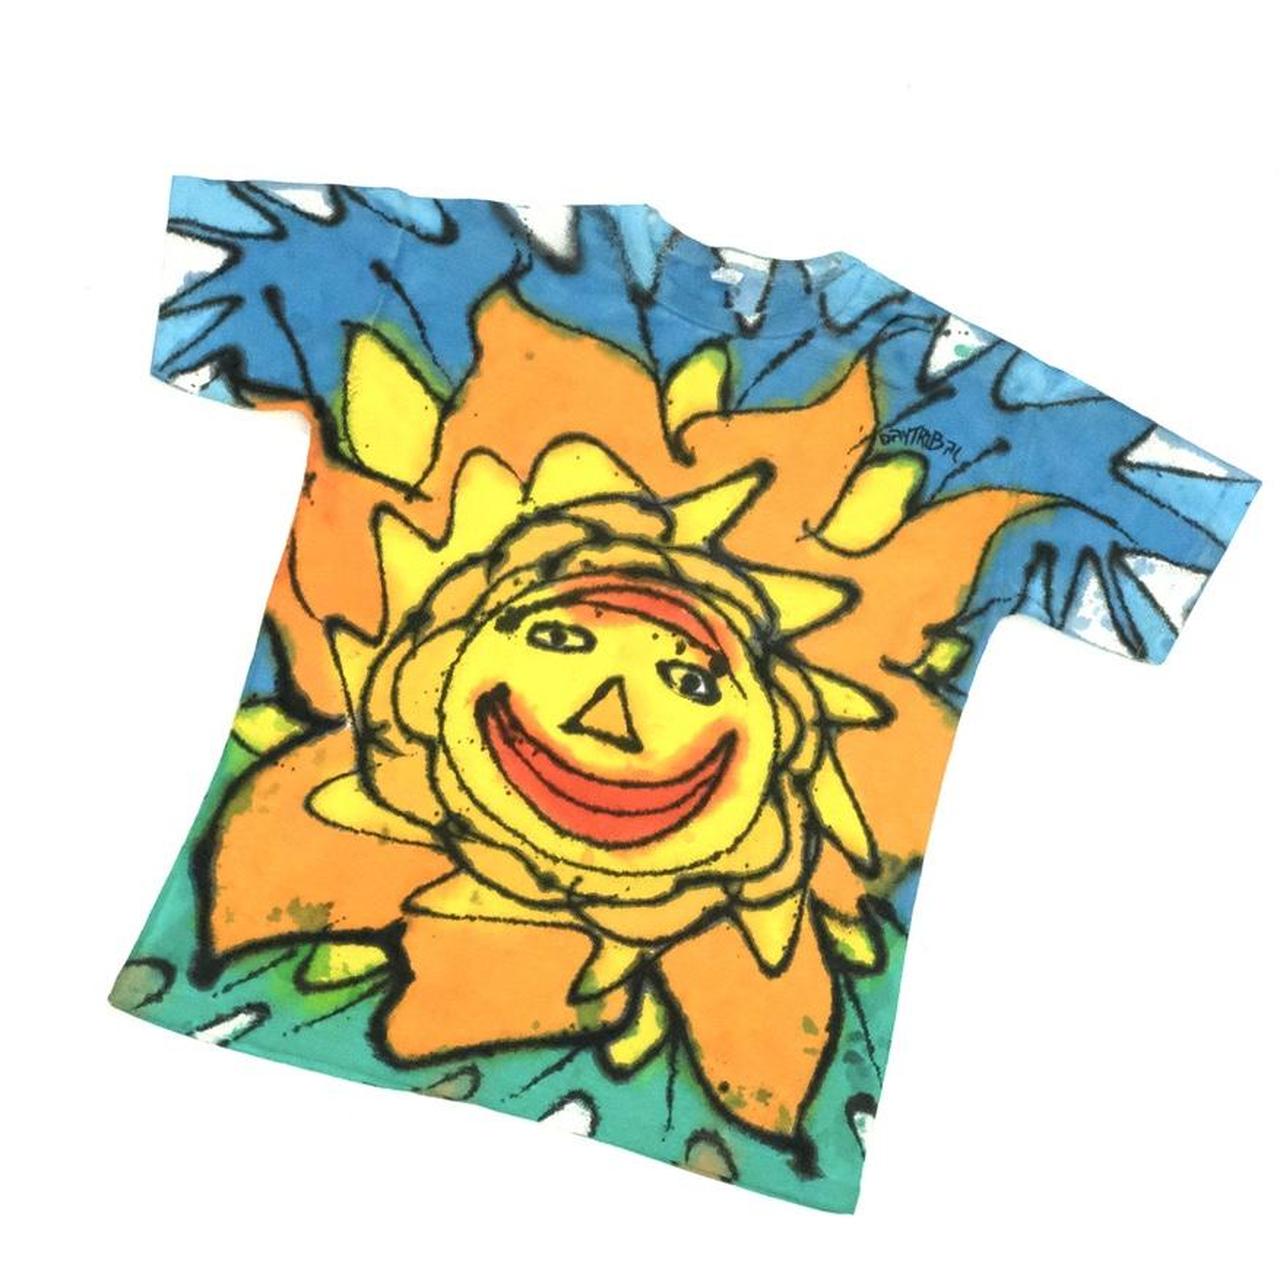 Vintage hand printed sun t-shirt